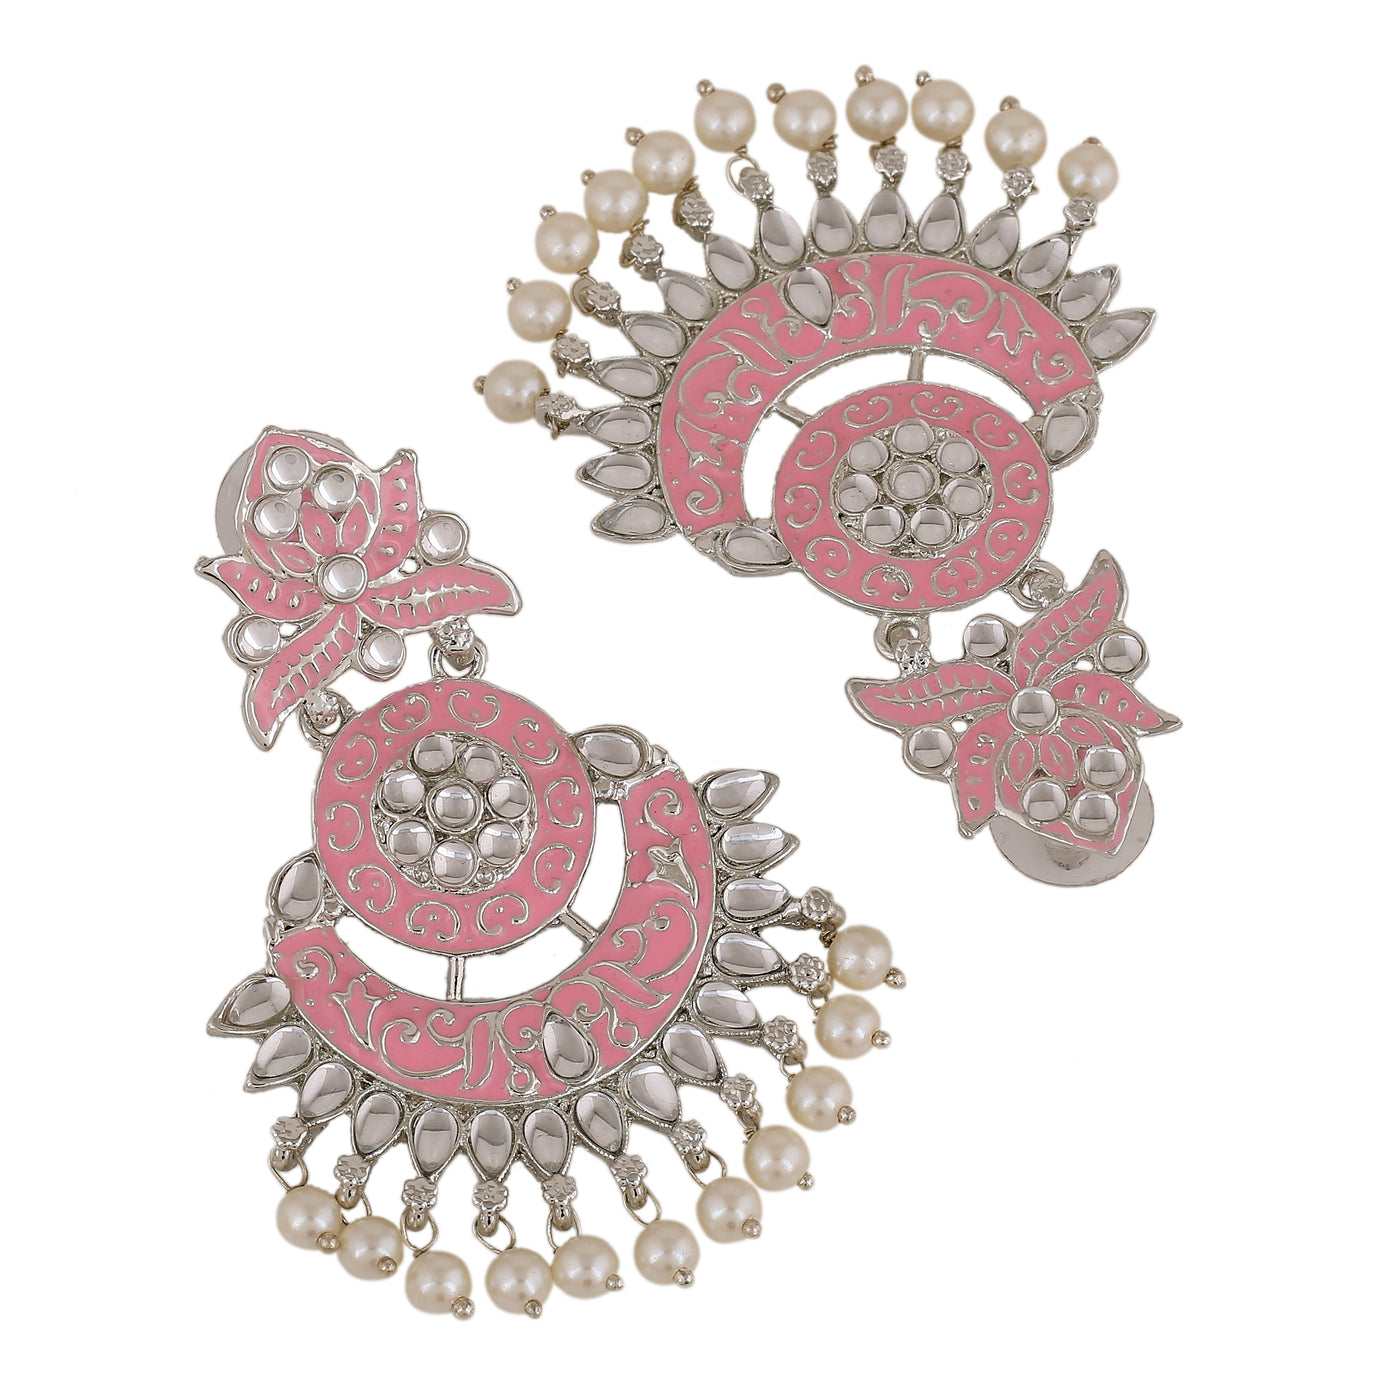 Estele Rhodium Plated Traditional Pink Meenakari Drop Earrings with Pearl for Women